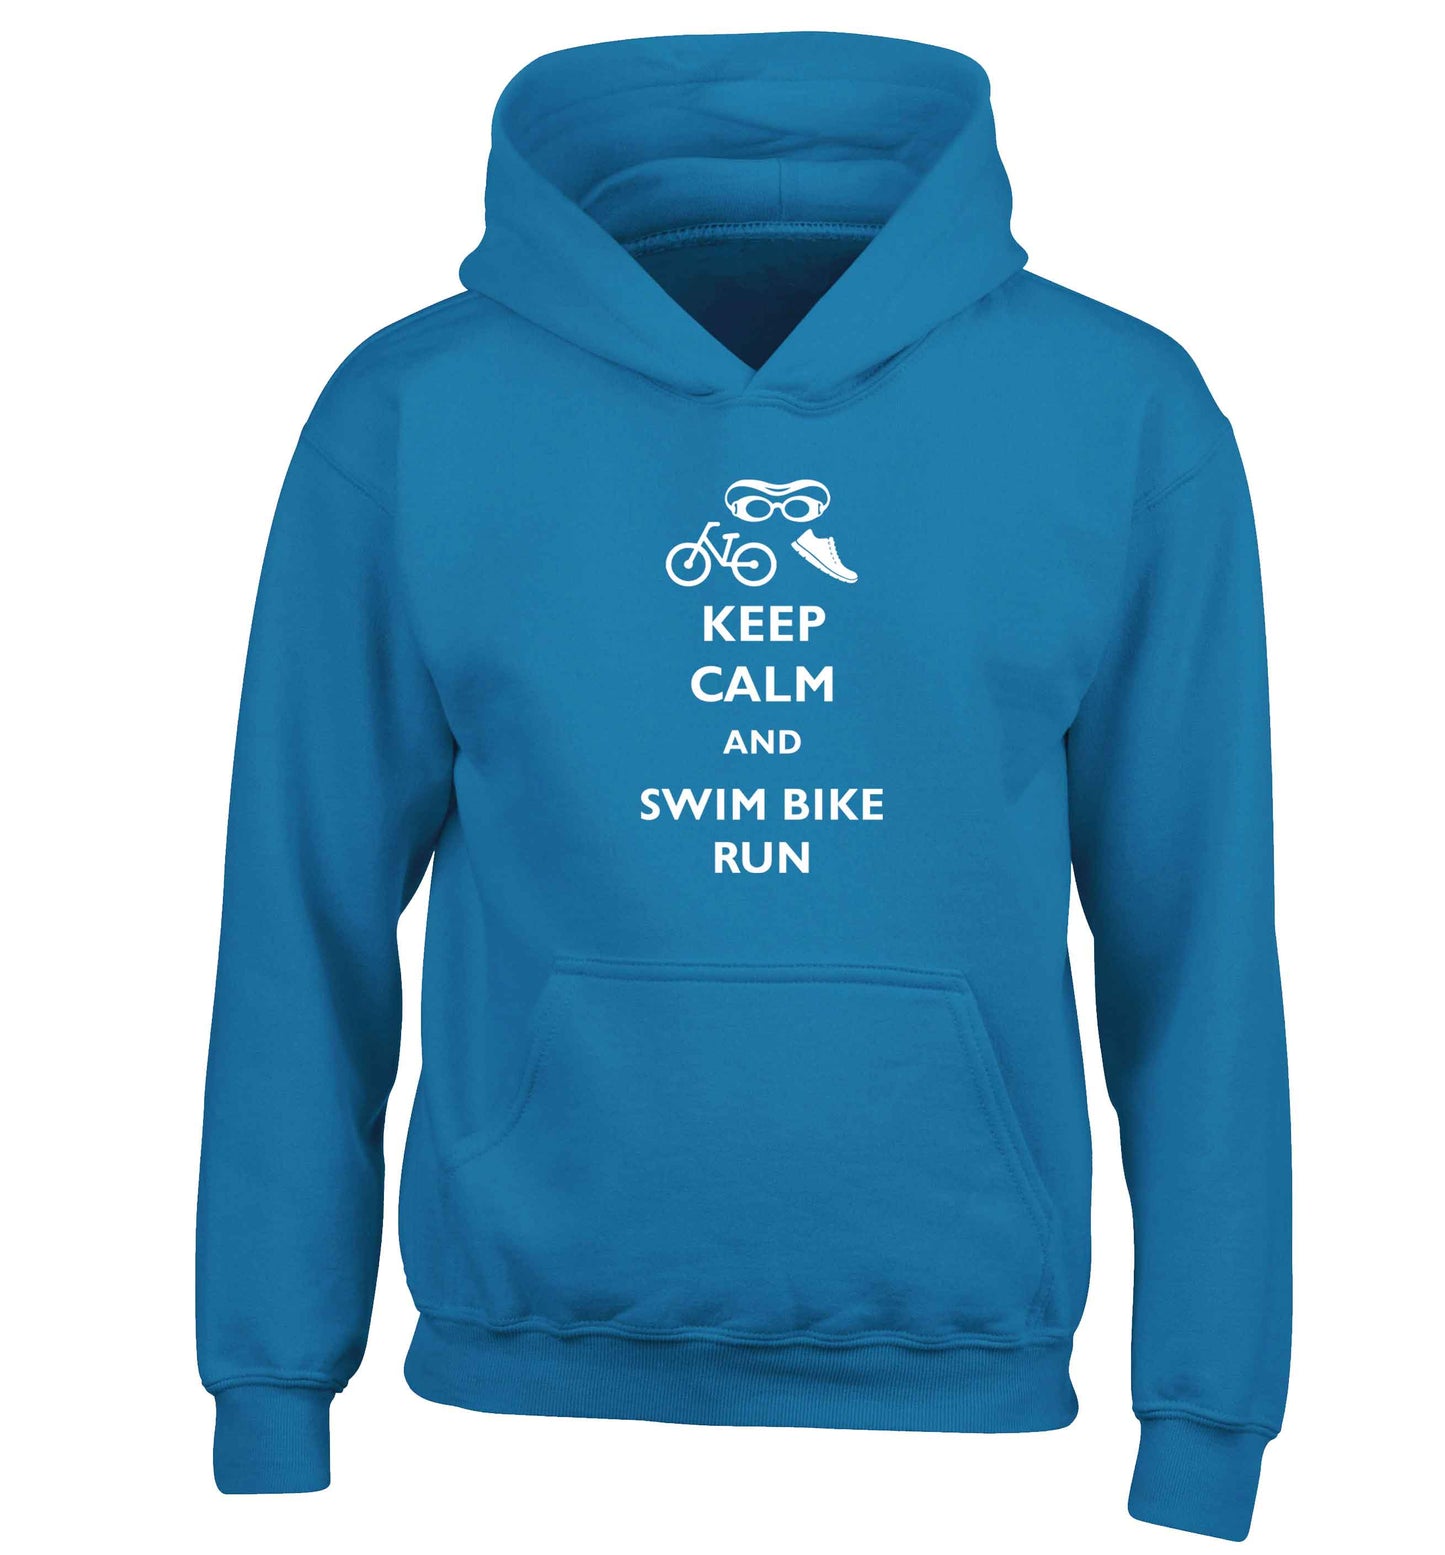 Keep calm and swim bike run children's blue hoodie 12-13 Years